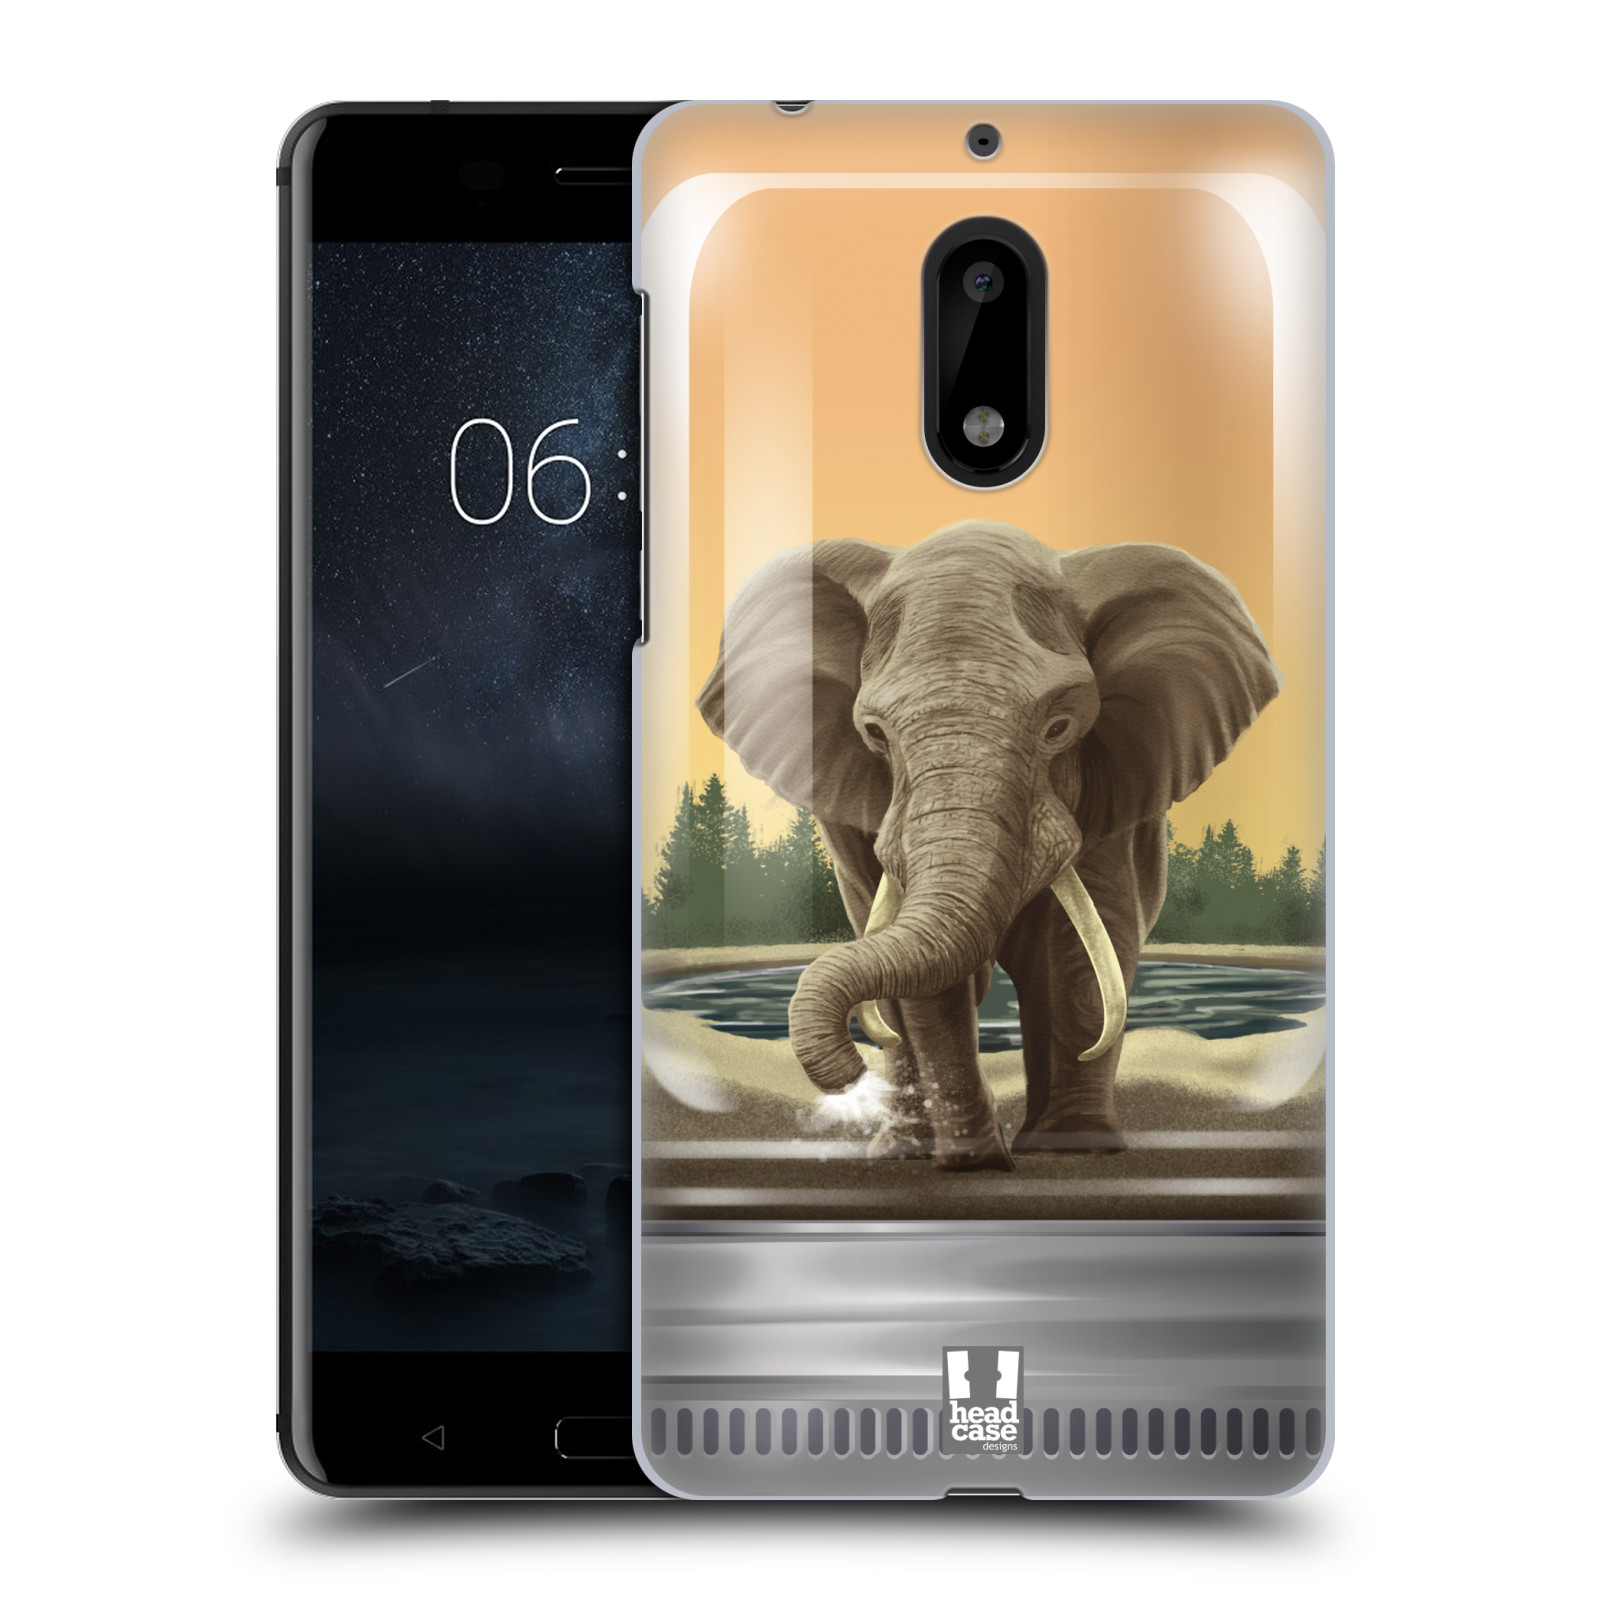 HEAD CASE plastový obal na mobil Nokia 6 vzor Zvířátka v těžítku slon